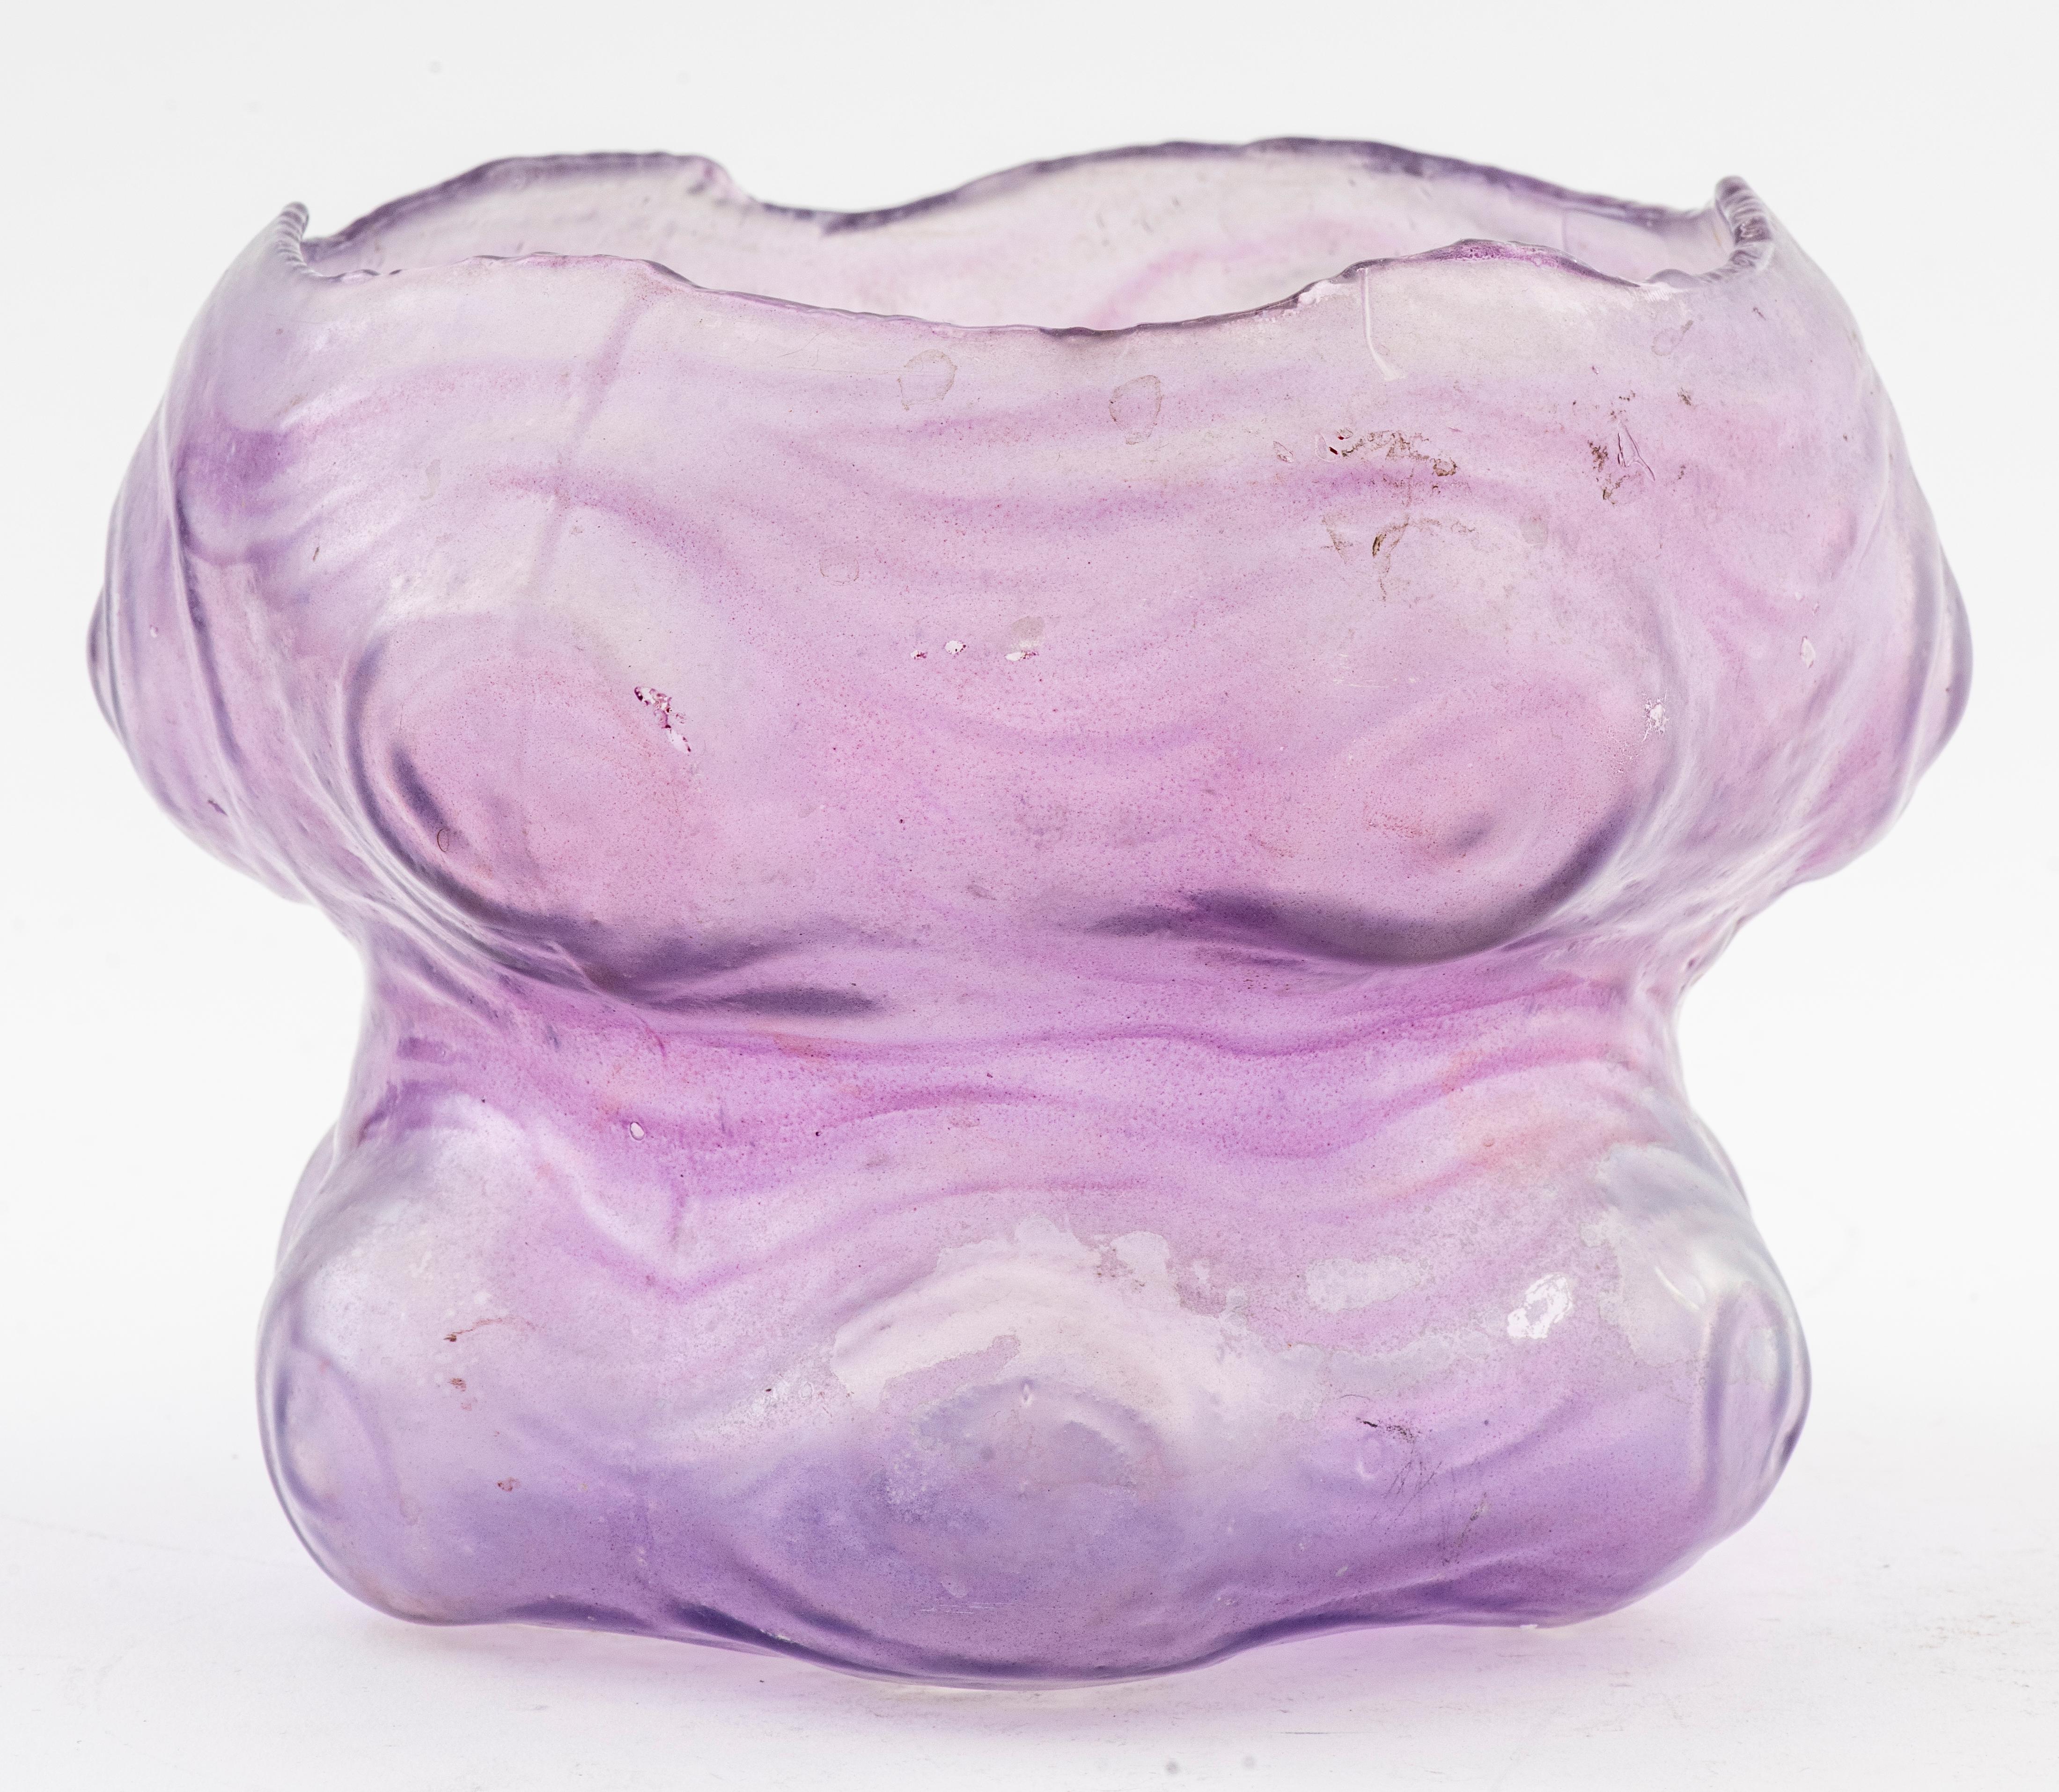 Contemporary hand-blown purple glass bowl. 

Dimensions: 7